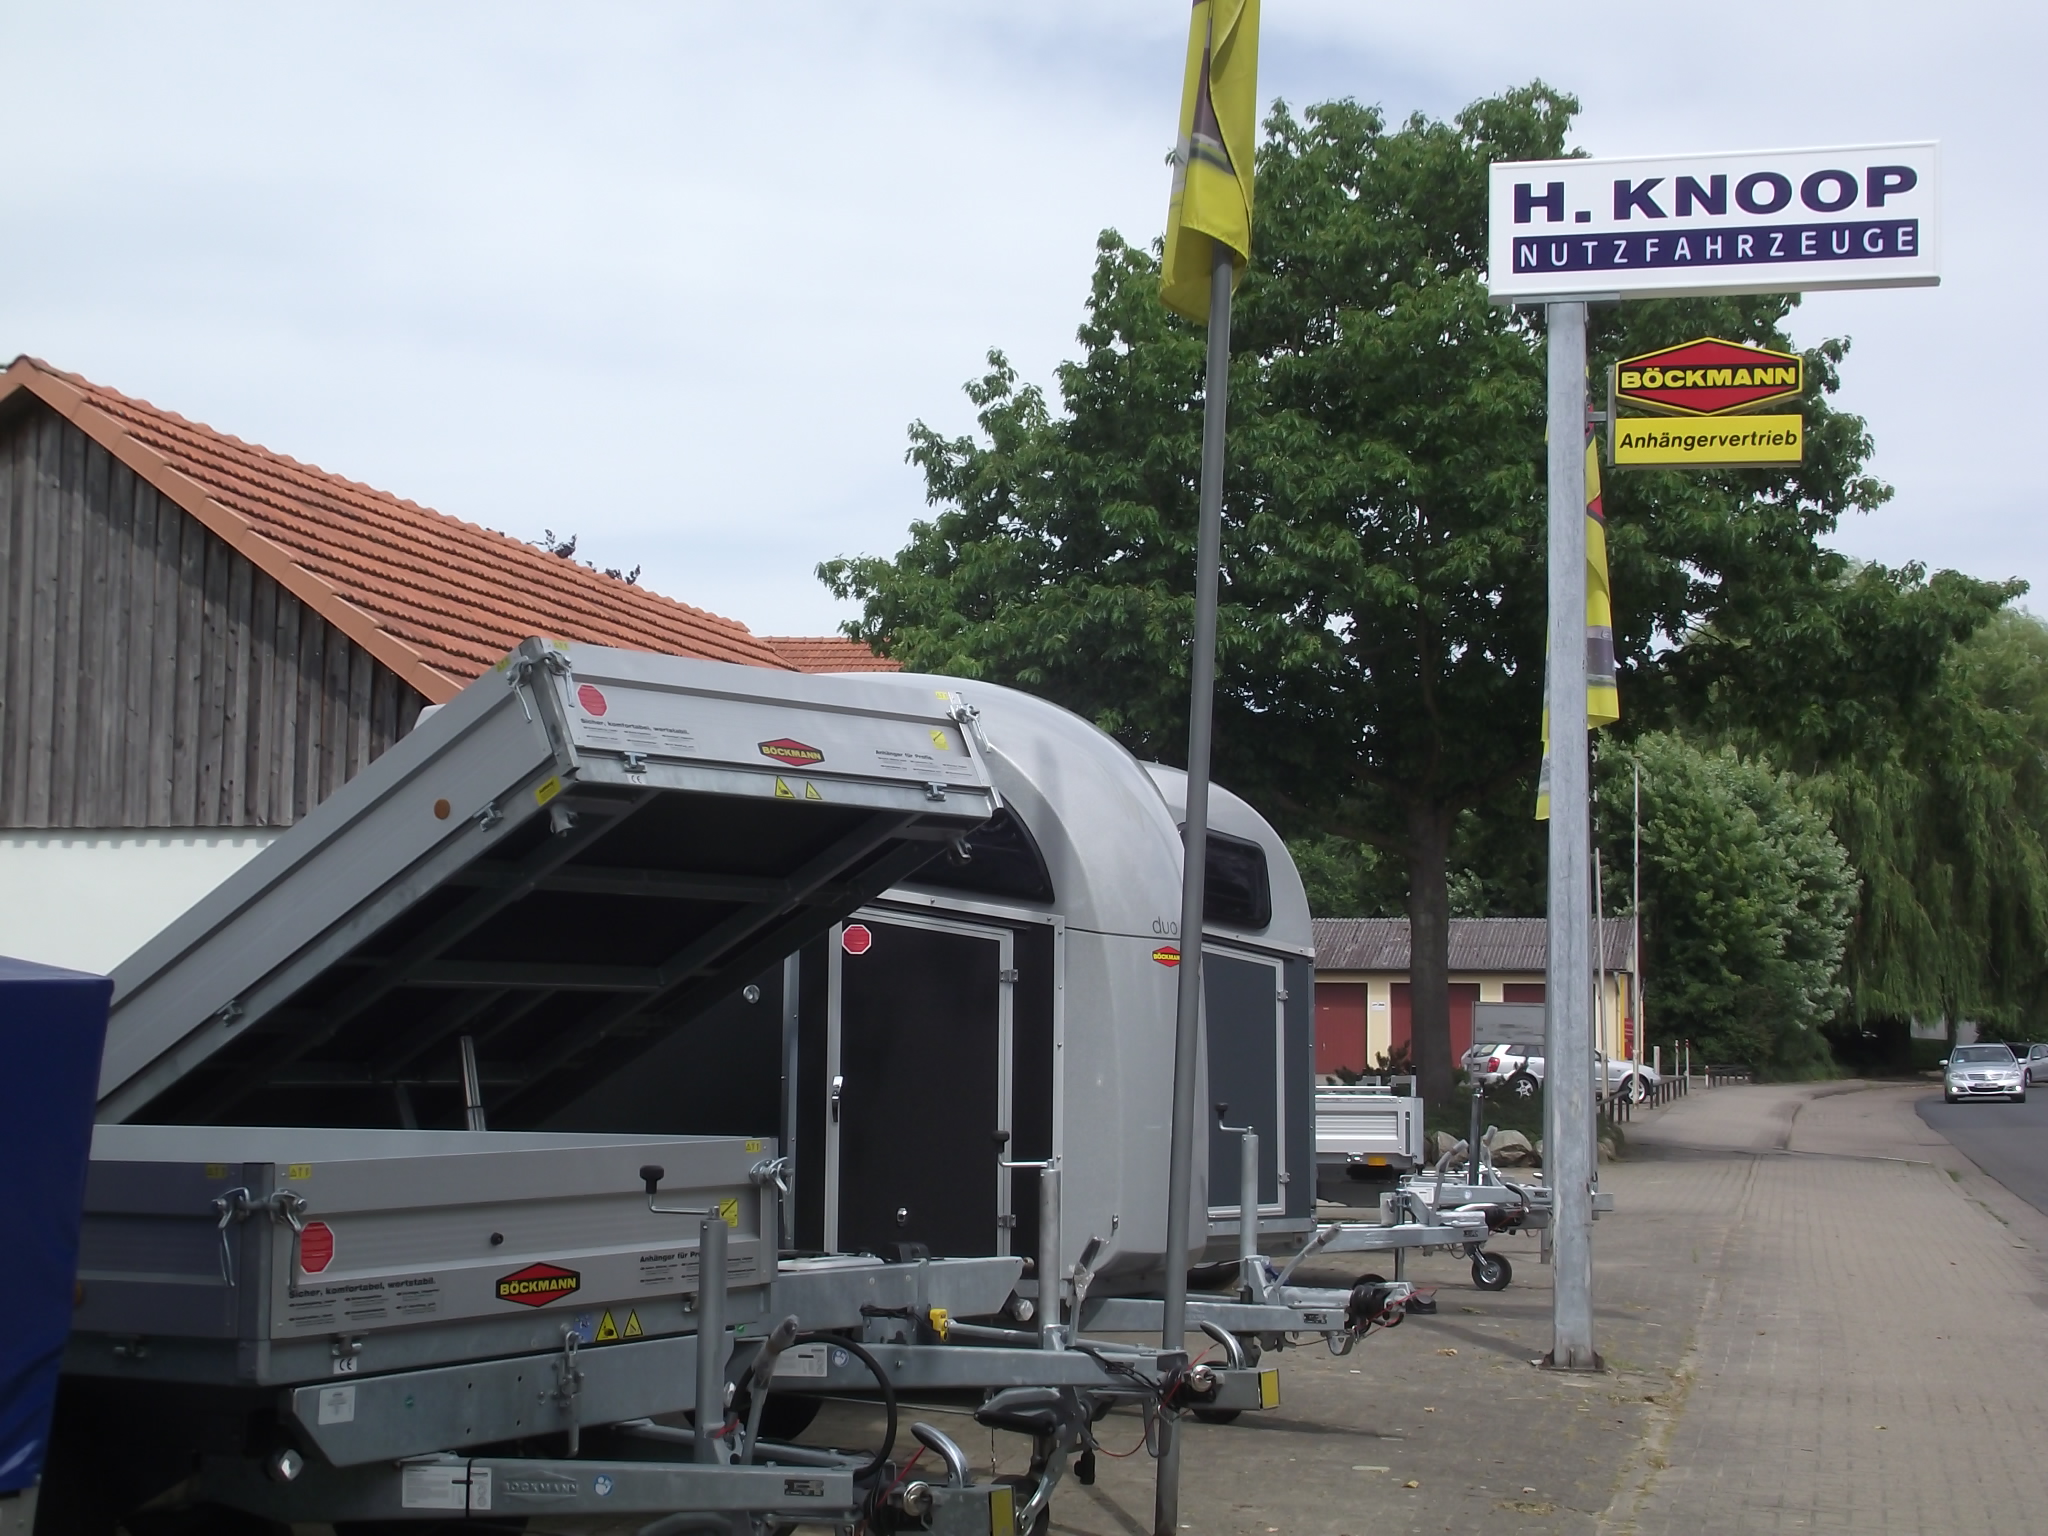 Knoop Nutzfahrzeuge in Tarmstedt